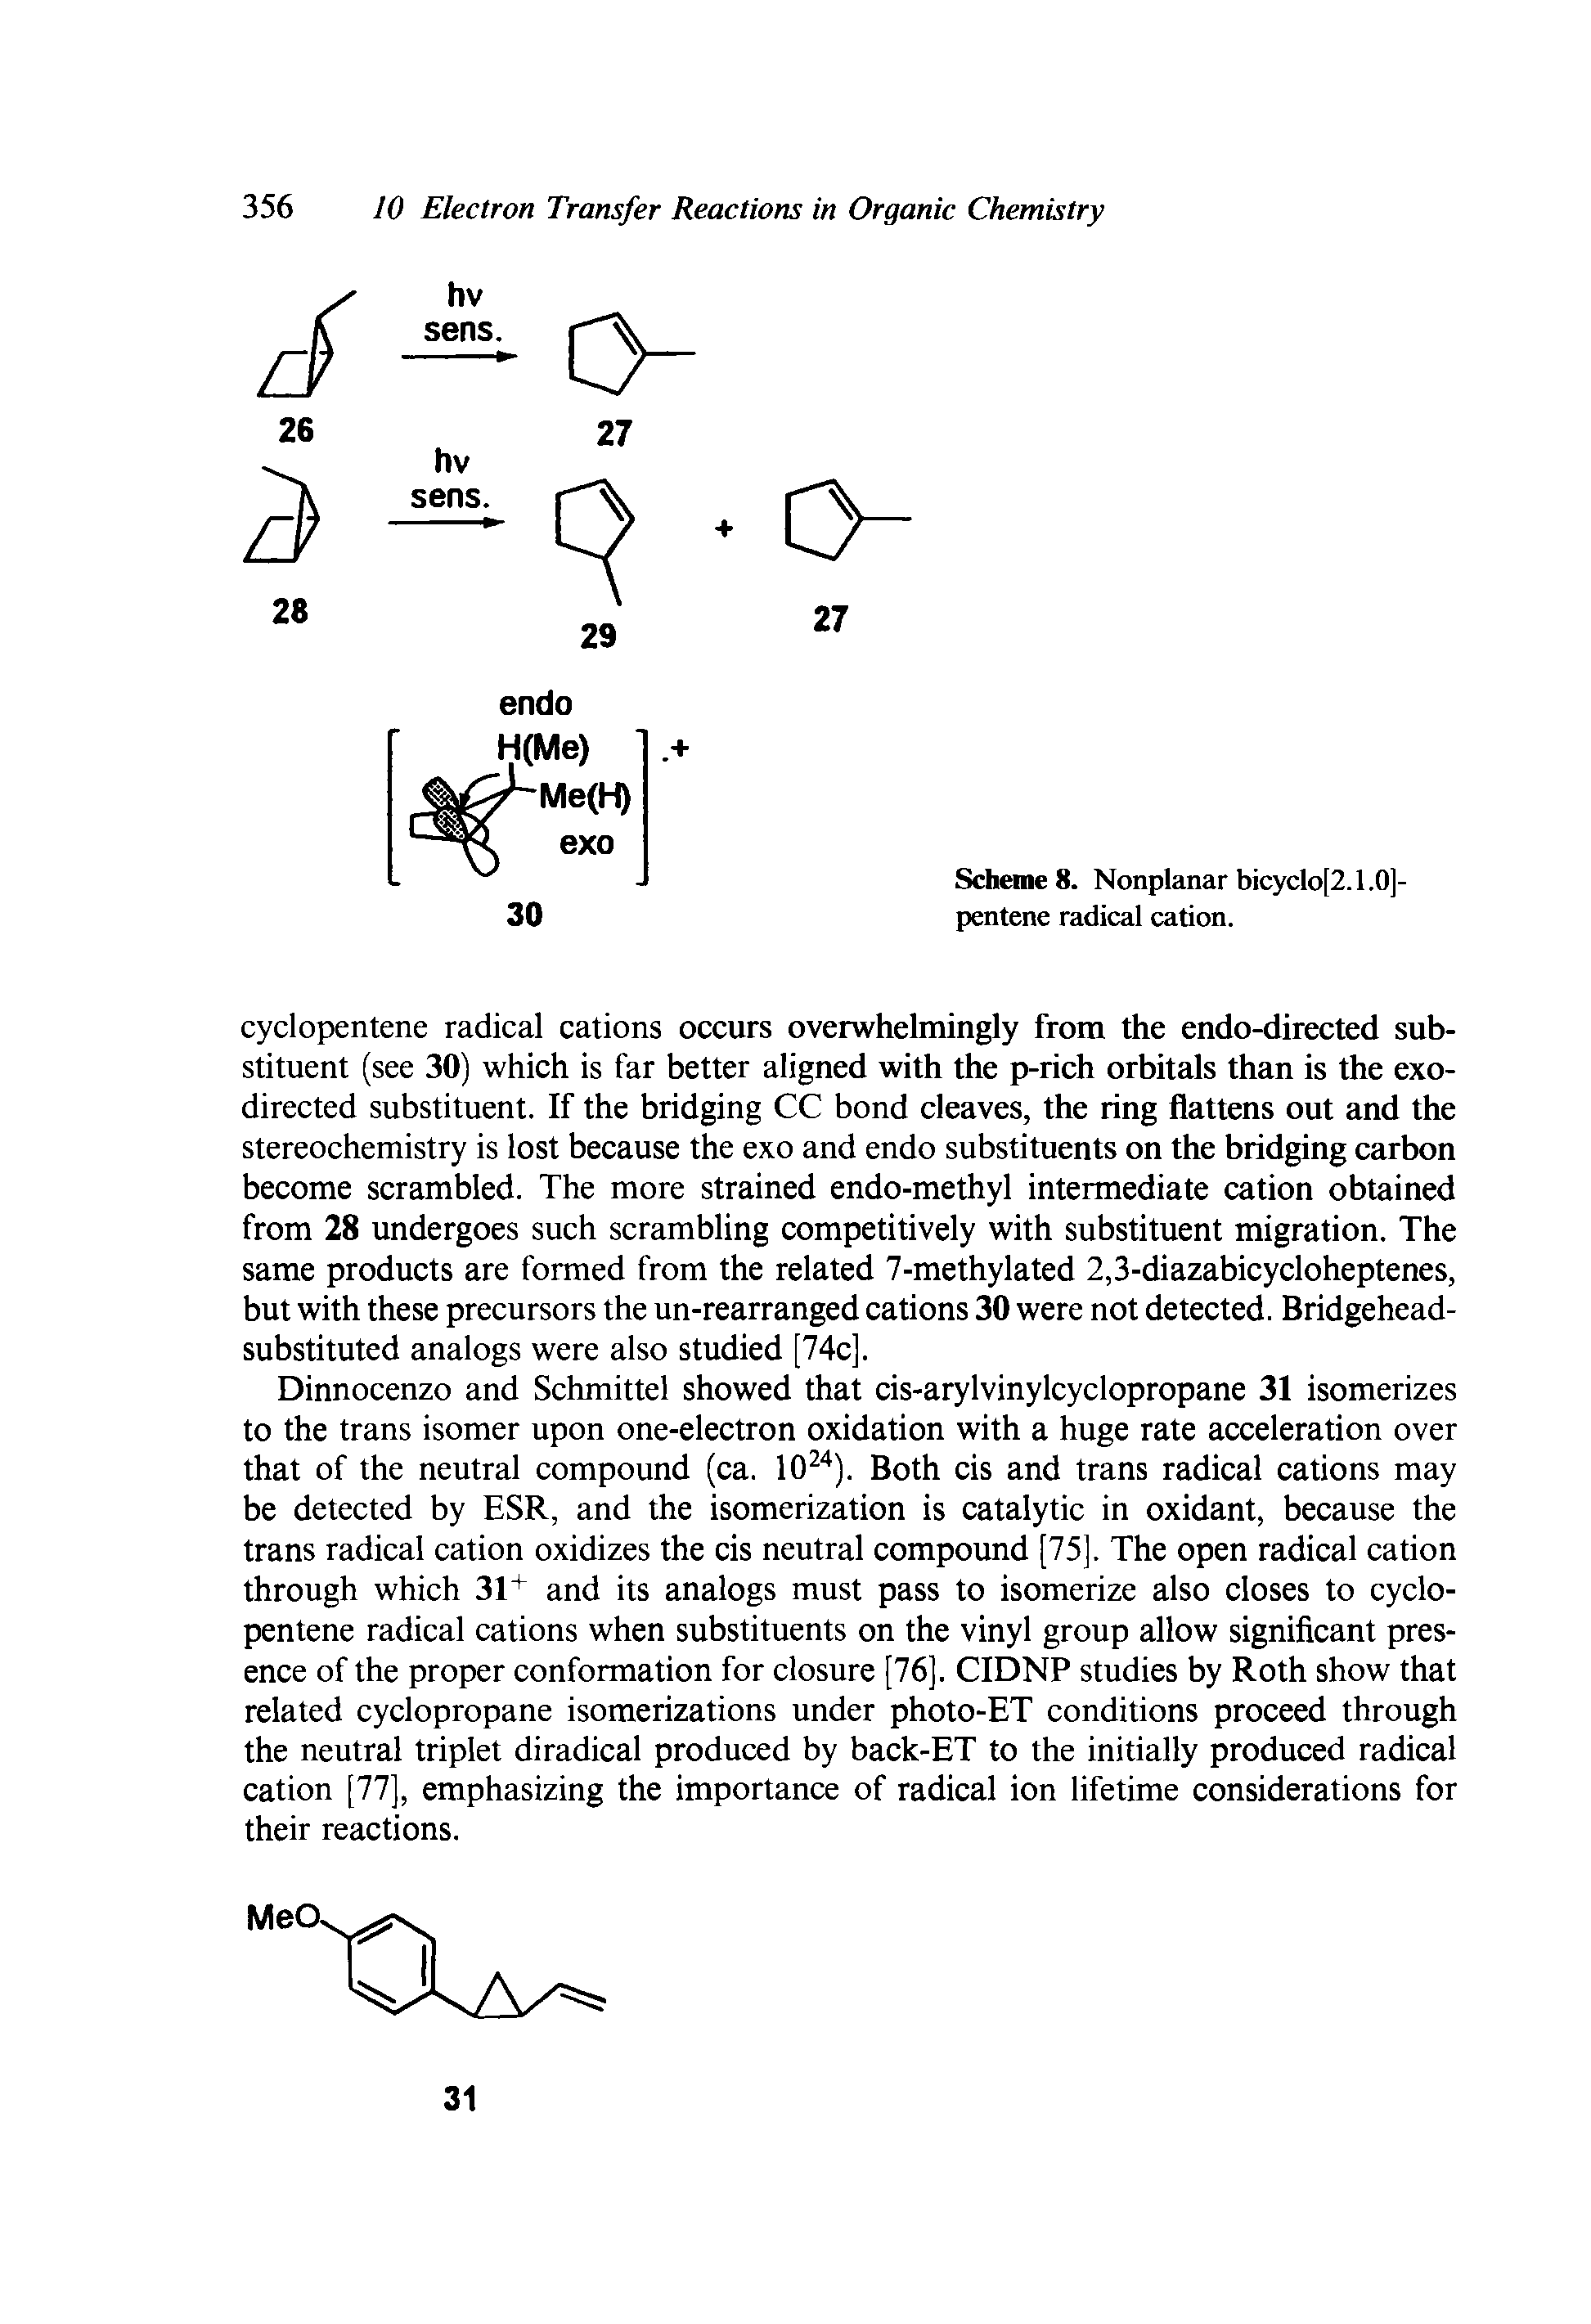 Schemes. Nonplanar bicyclo[2.1.0]-pentene radical cation.